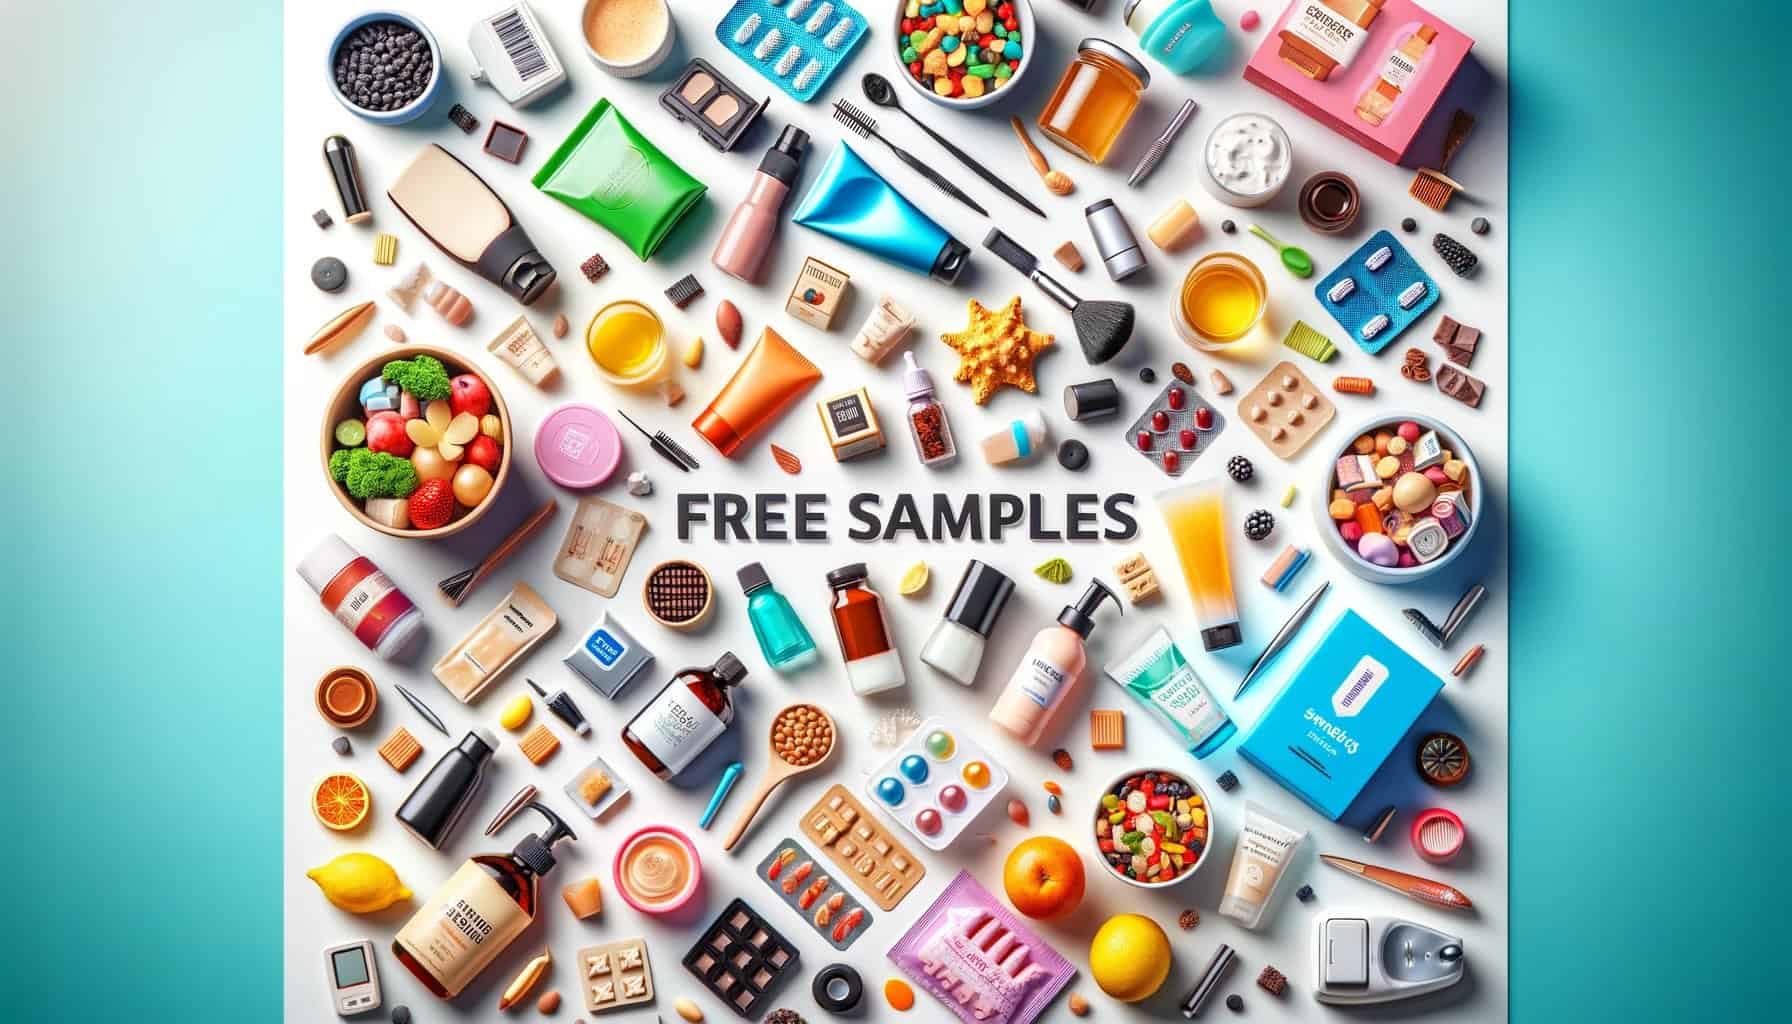 Free sample deals